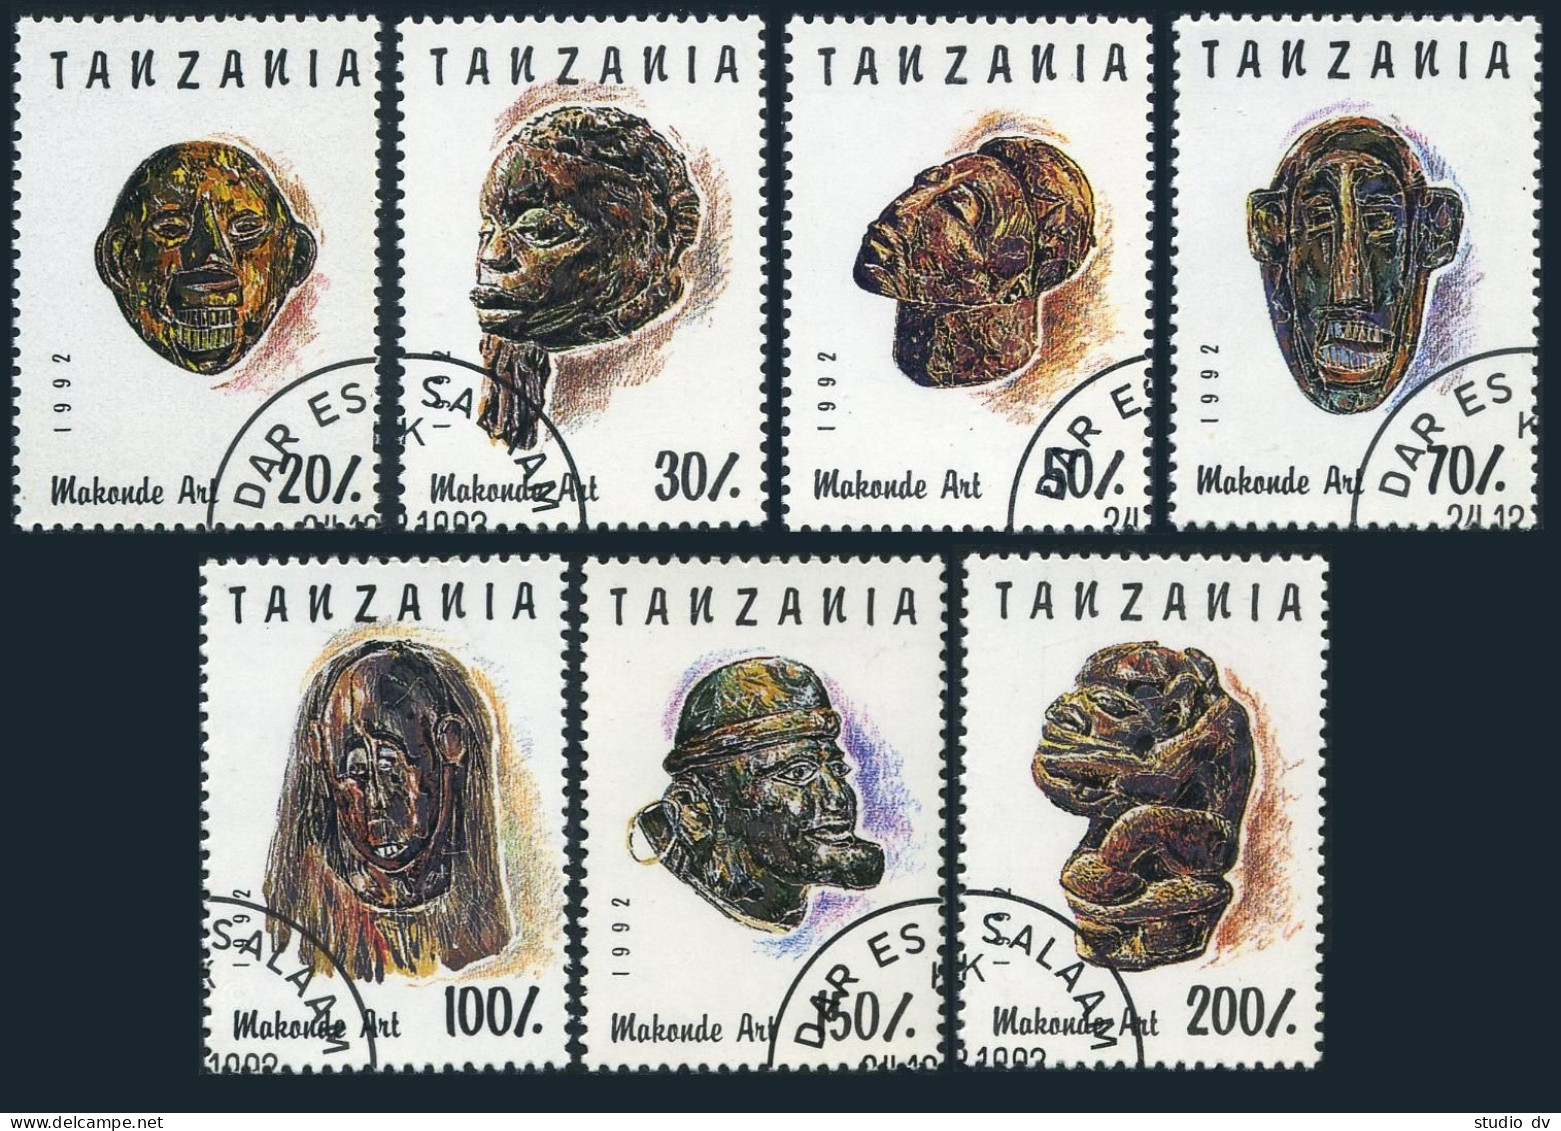 Tanzania 985A-985G,CTO.Michel 1437-1443. Various Carved Faces,1992. - Tanzania (1964-...)